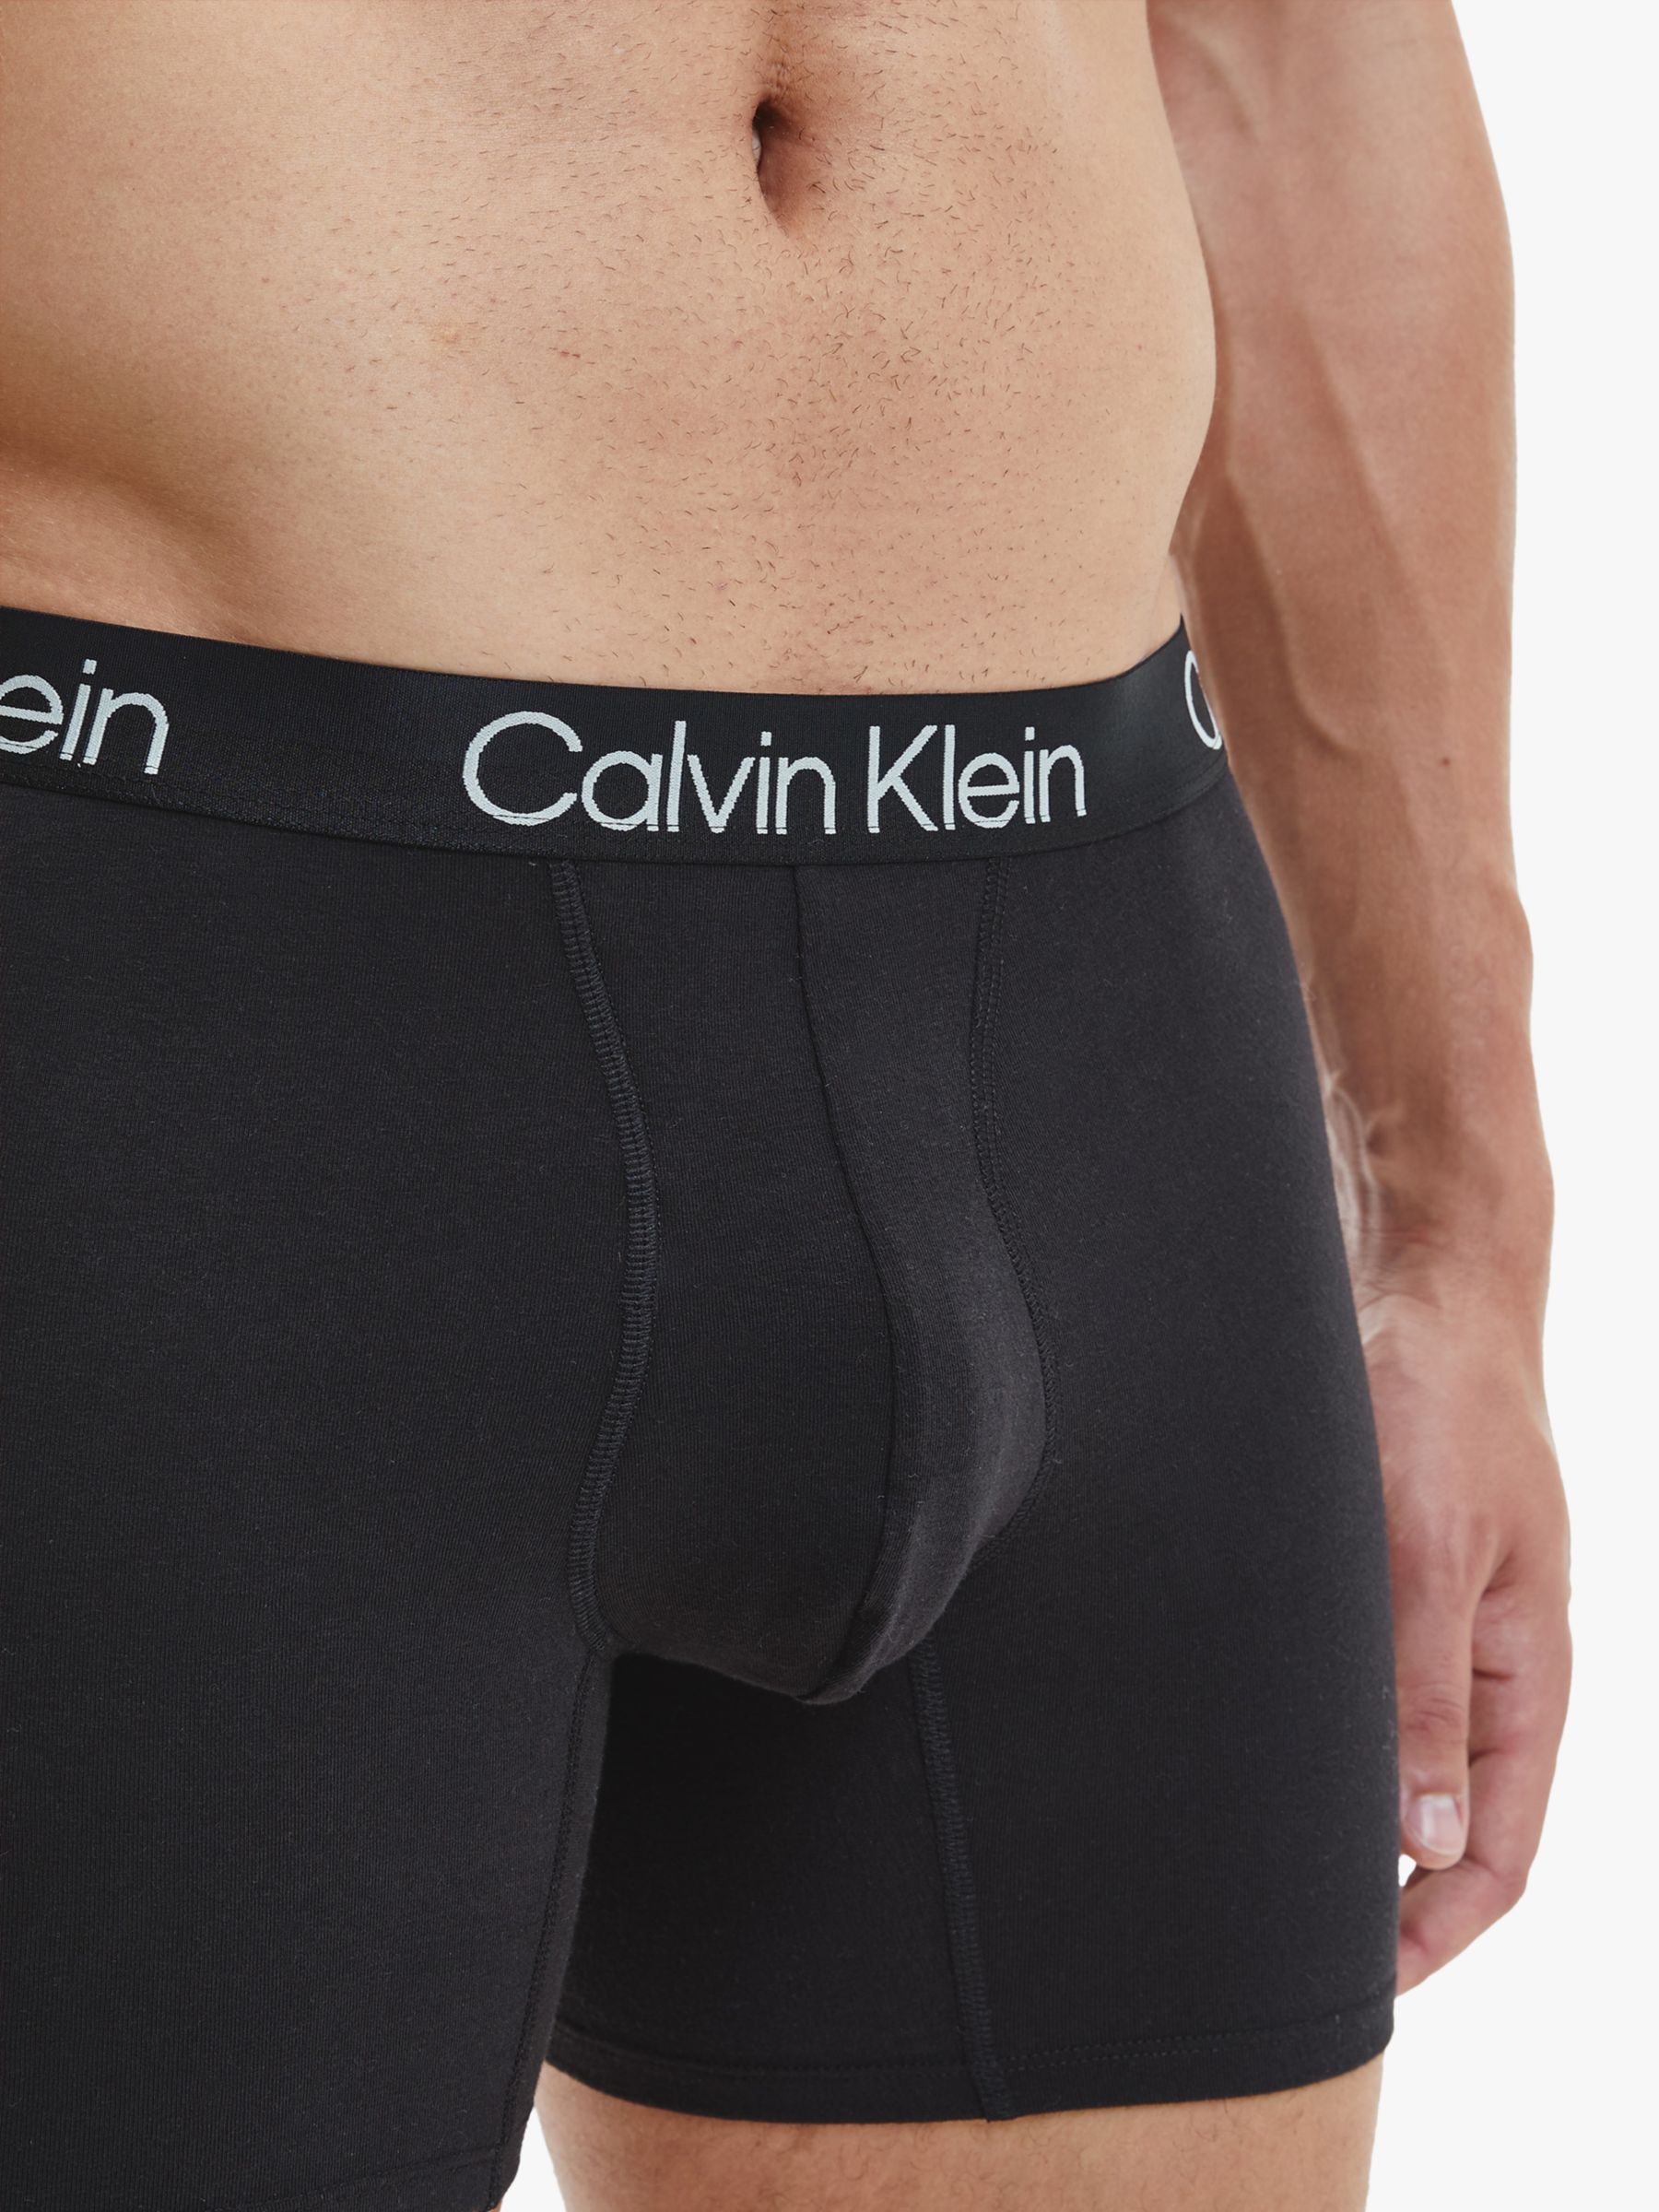 Buy Calvin Klein Cotton Stretch Regular Fit Boxer Briefs, Pack of 3, Black Online at johnlewis.com